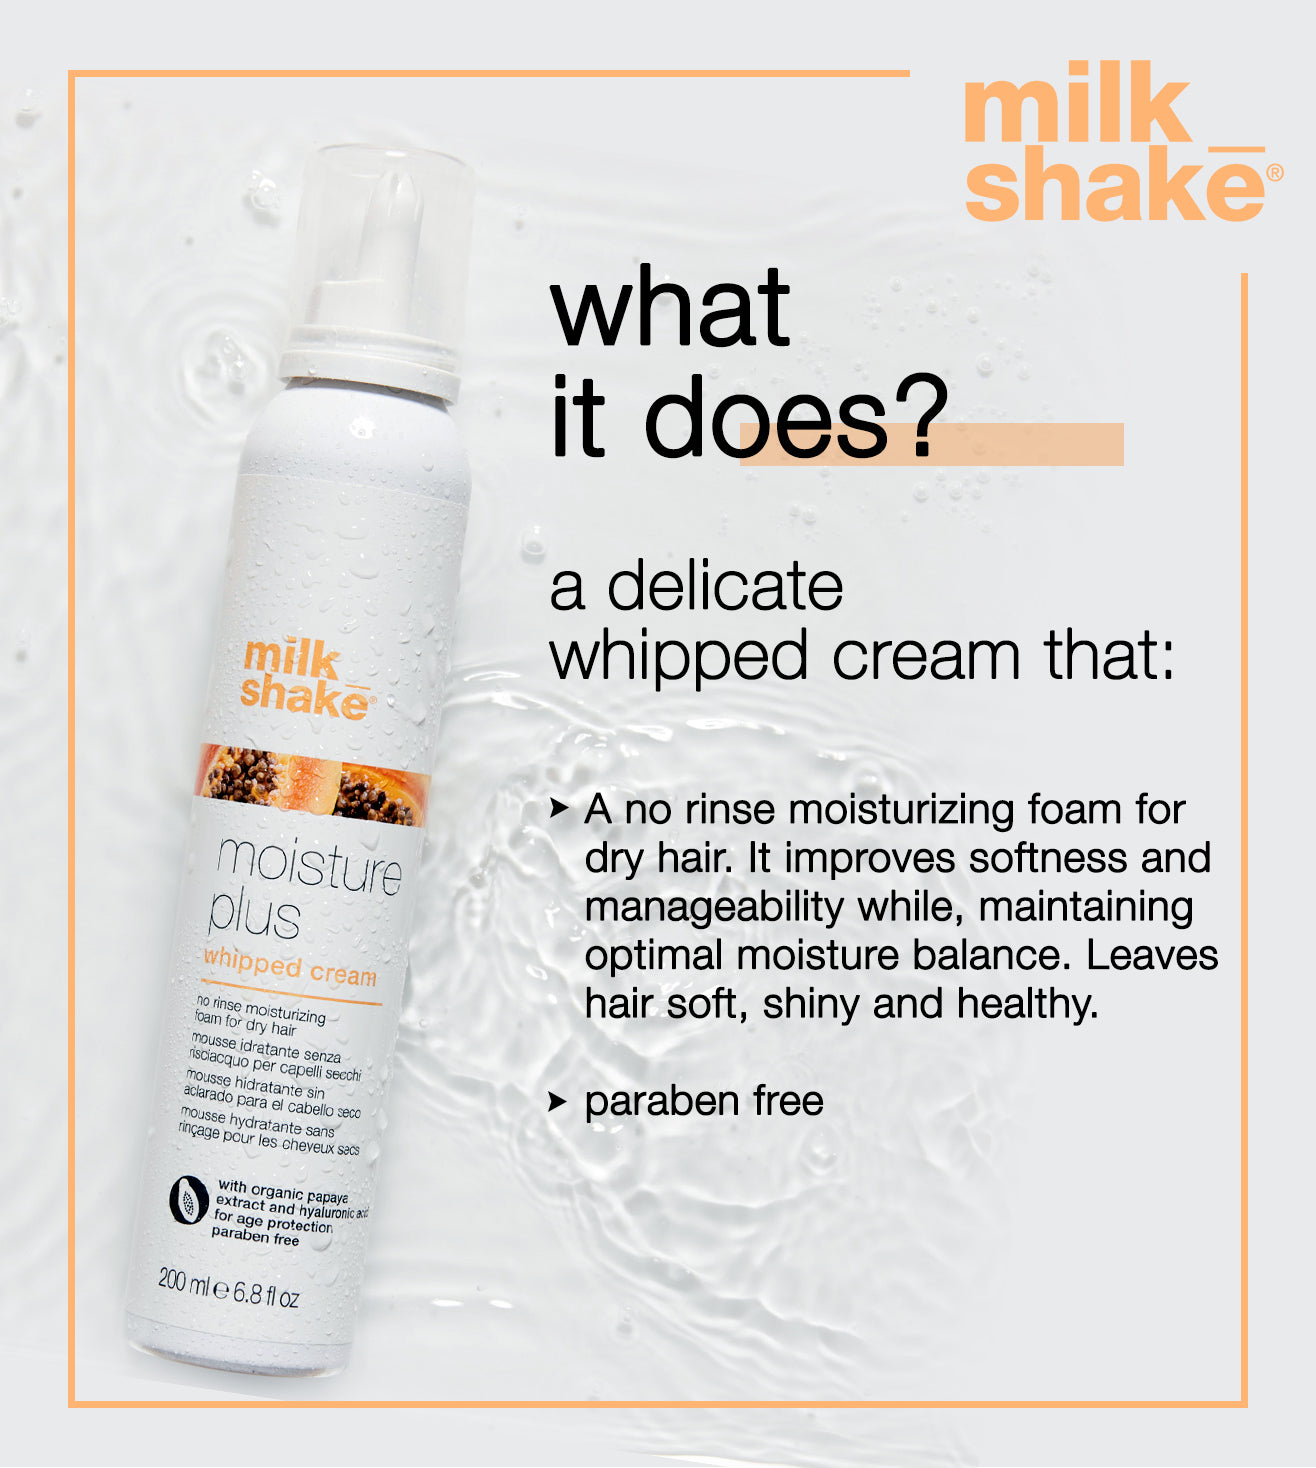 milk_shake moisture plus whipped cream